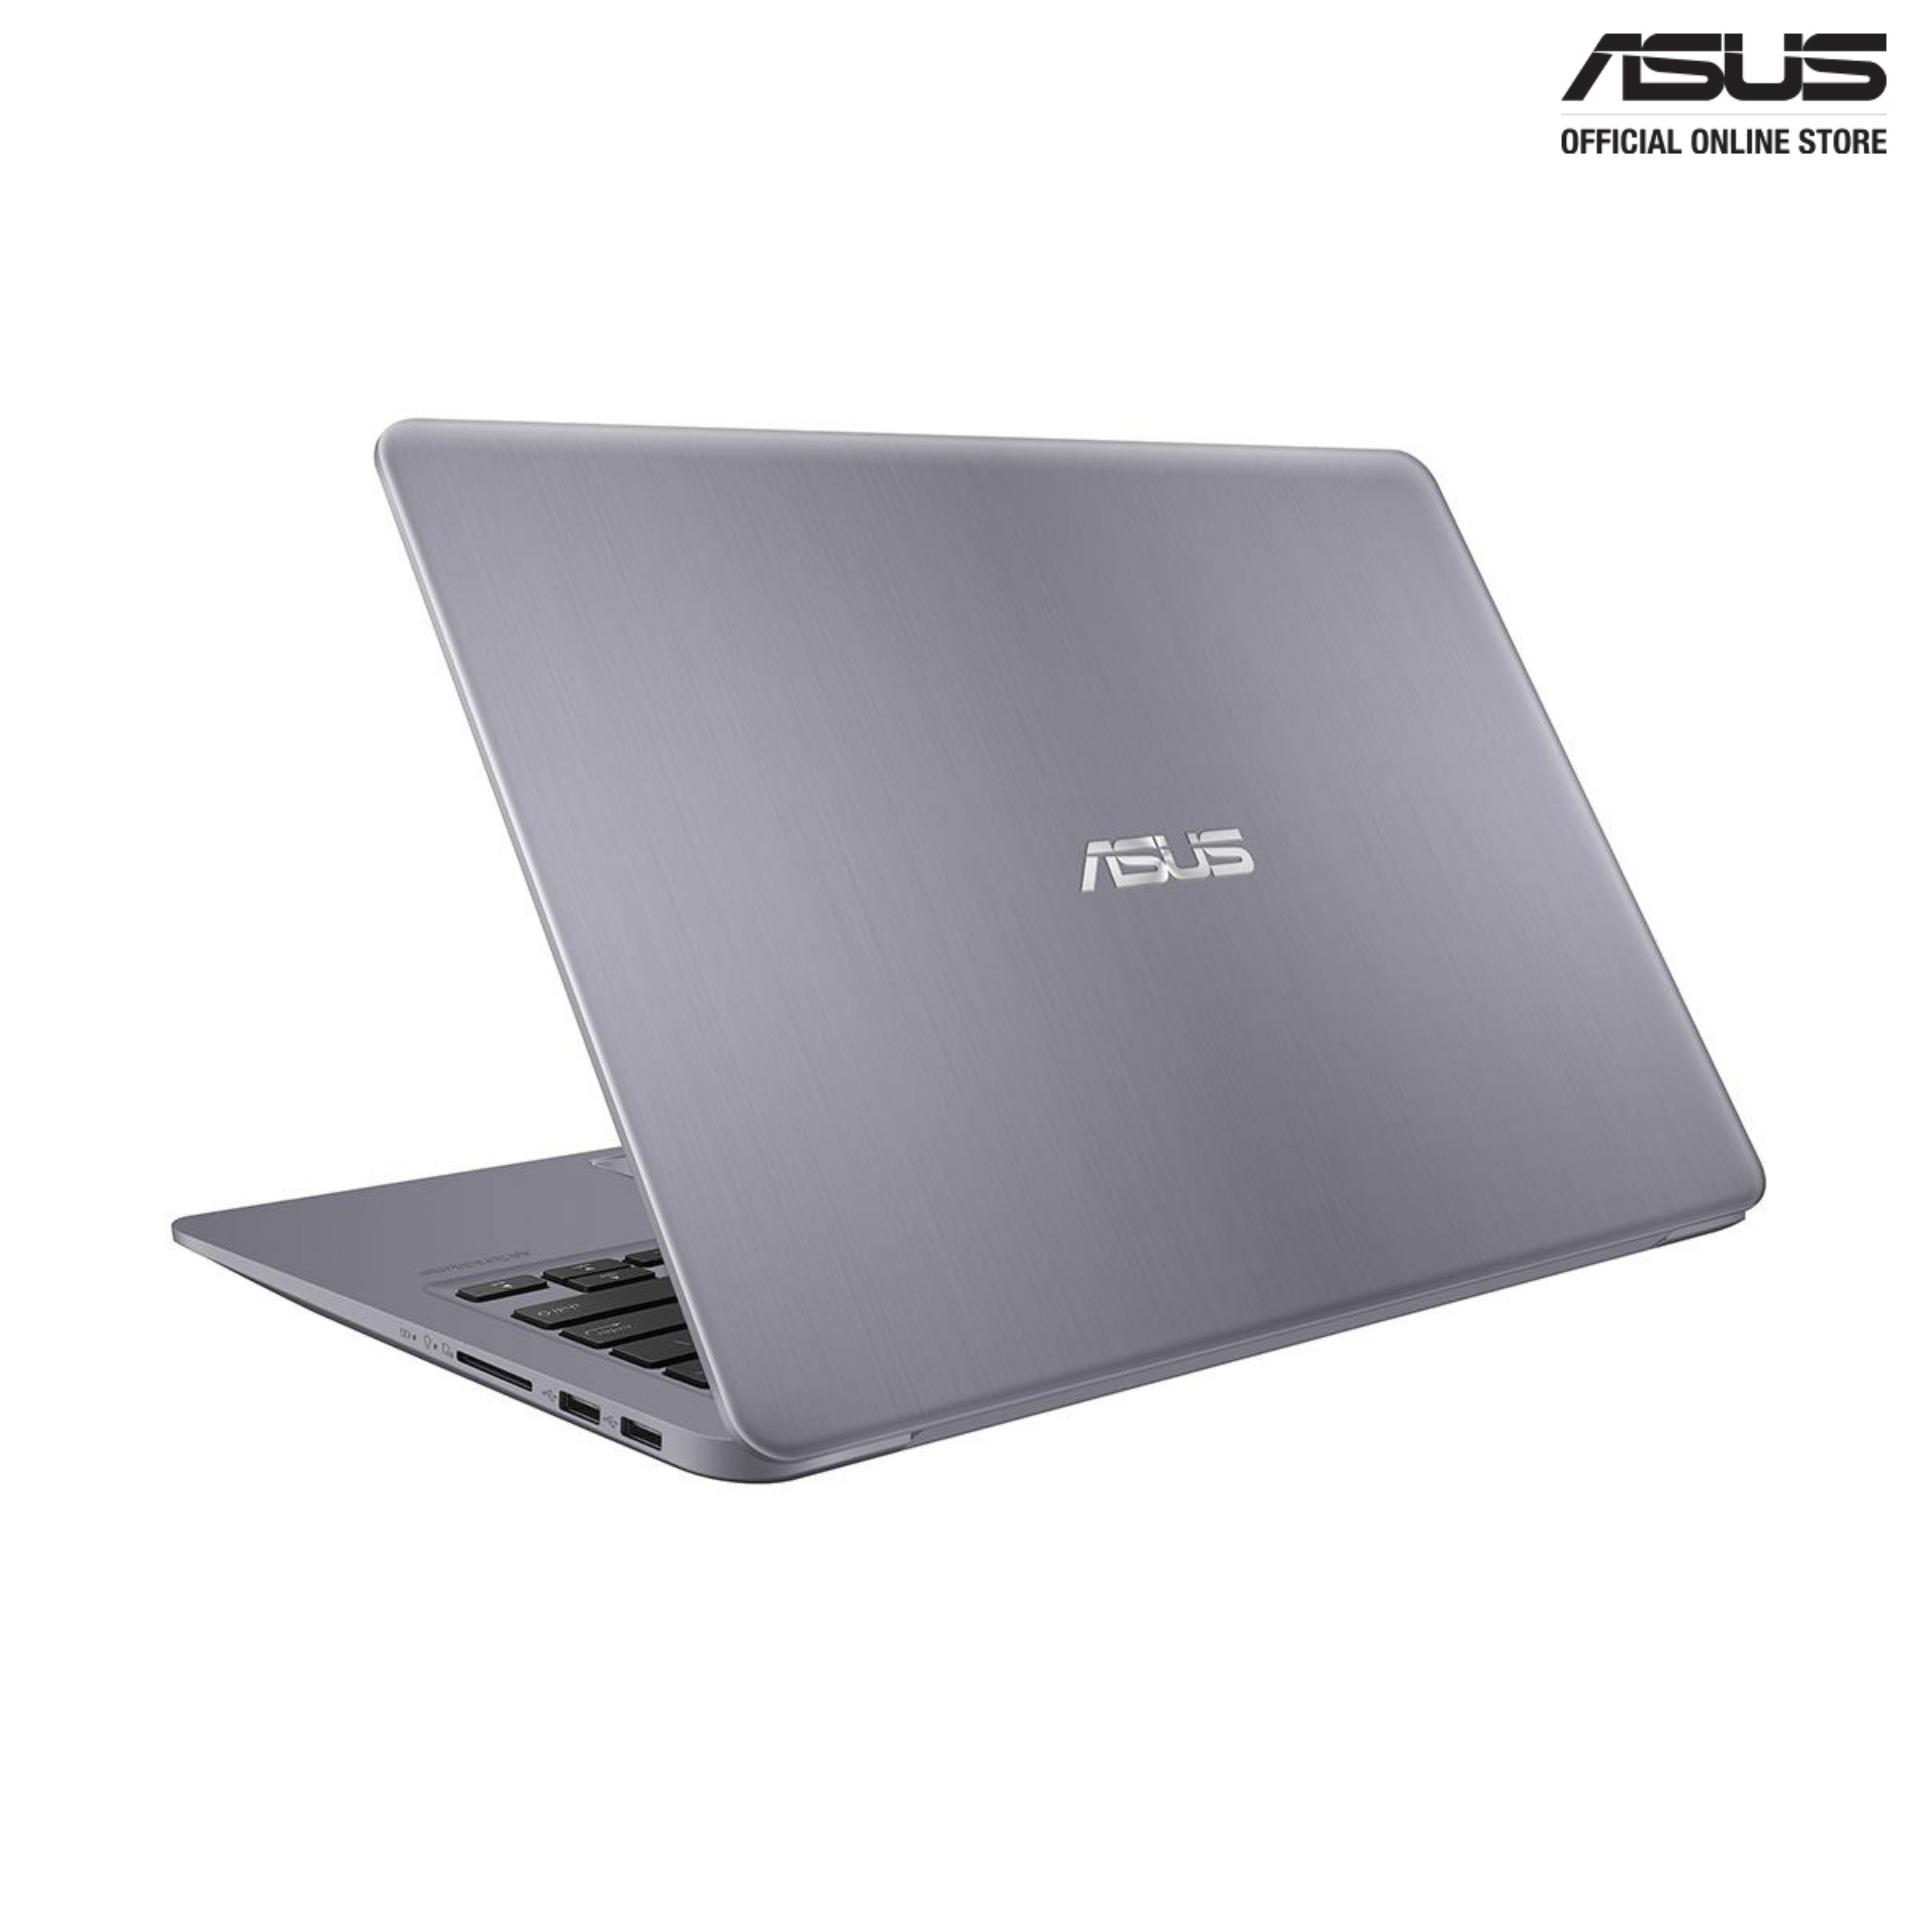 ASUS VivoBook S410UN-EB146TS (Star Grey)